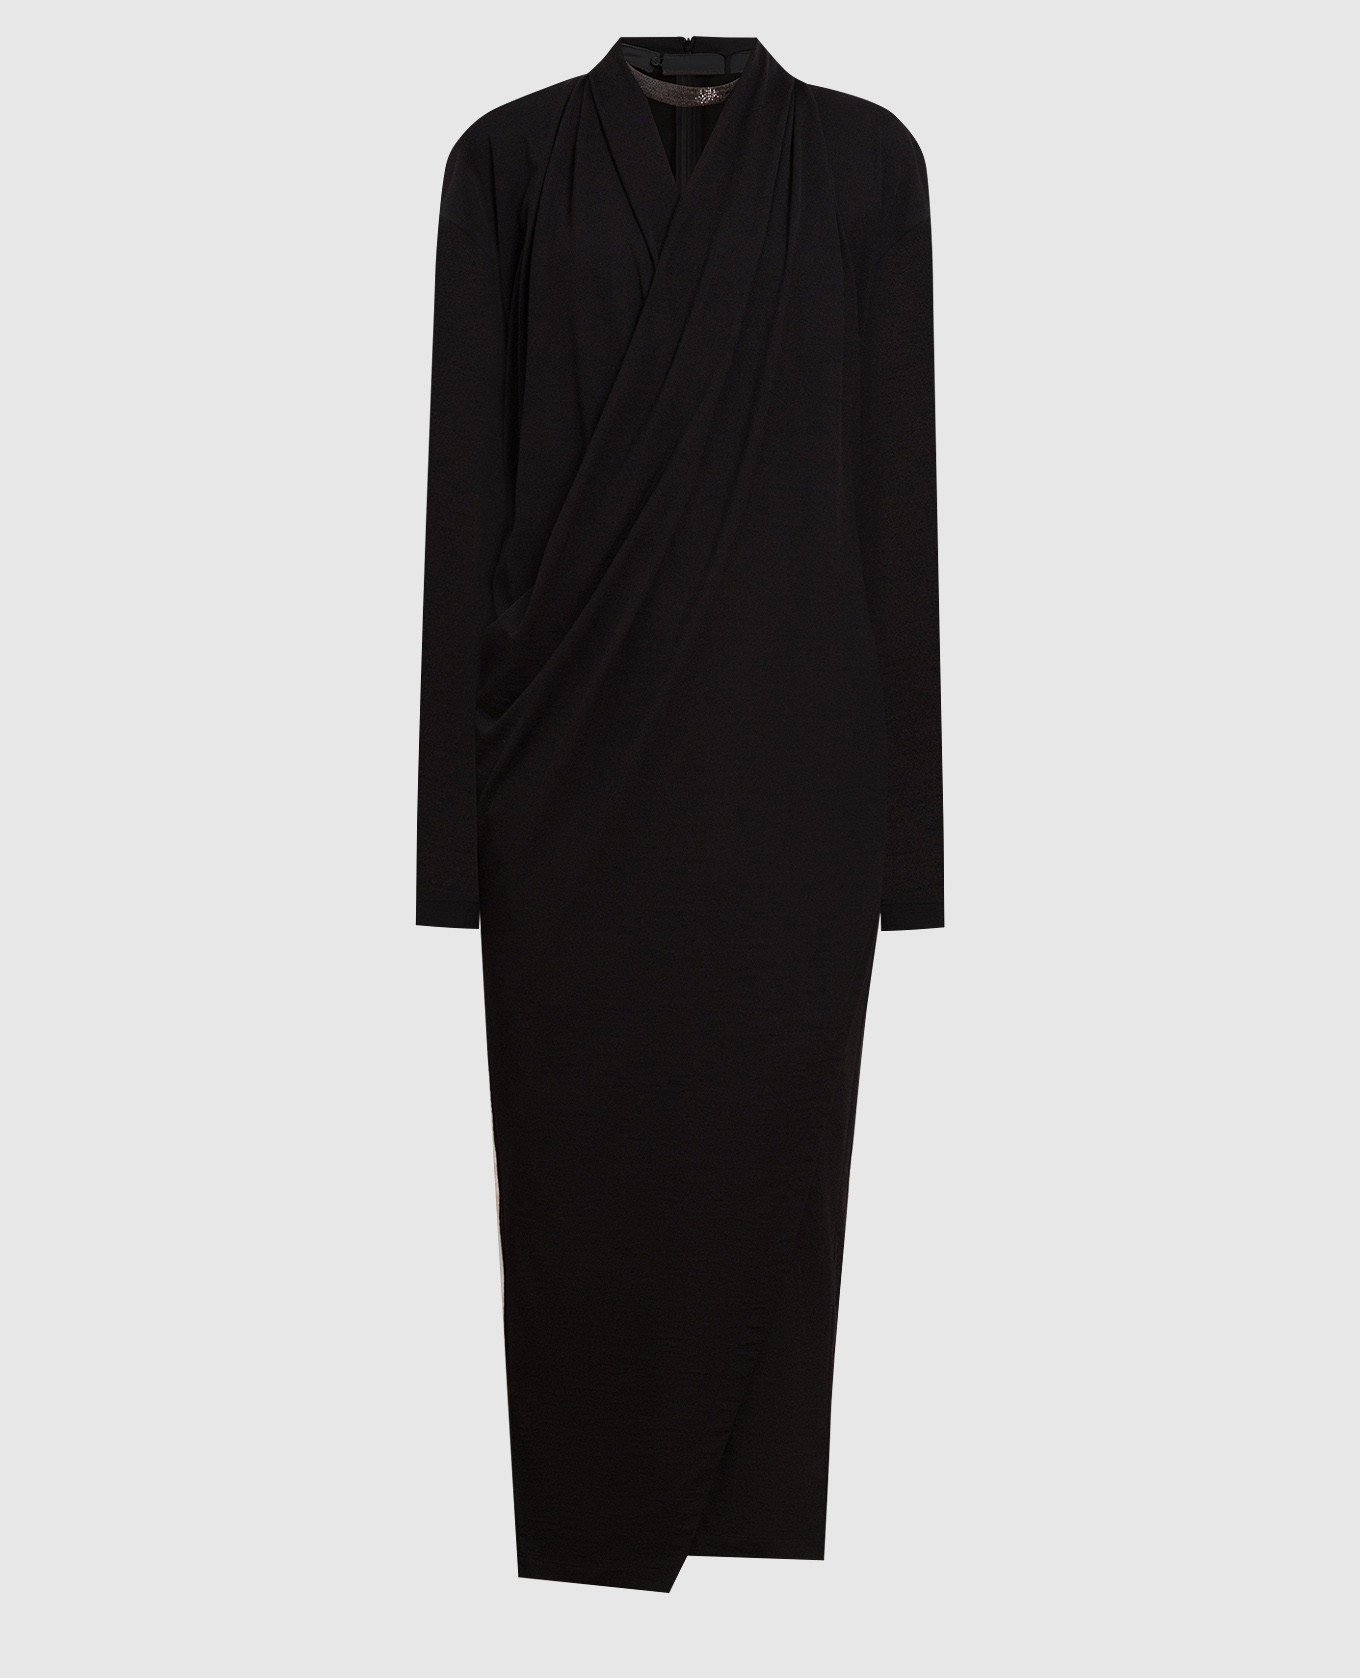 Black wool midi dress with choker